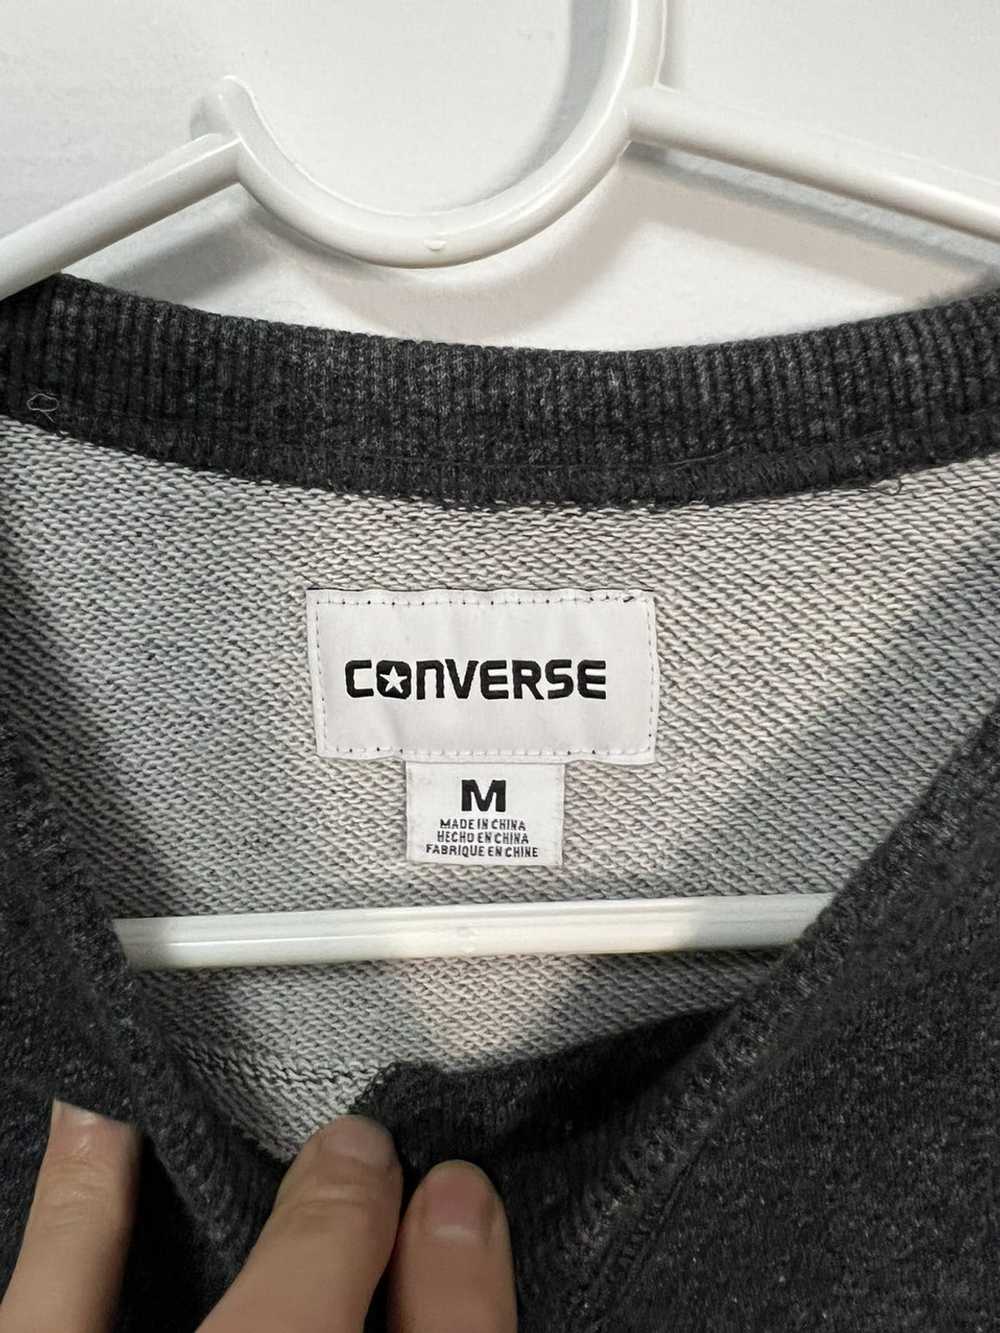 Converse Converse Essentials - image 1